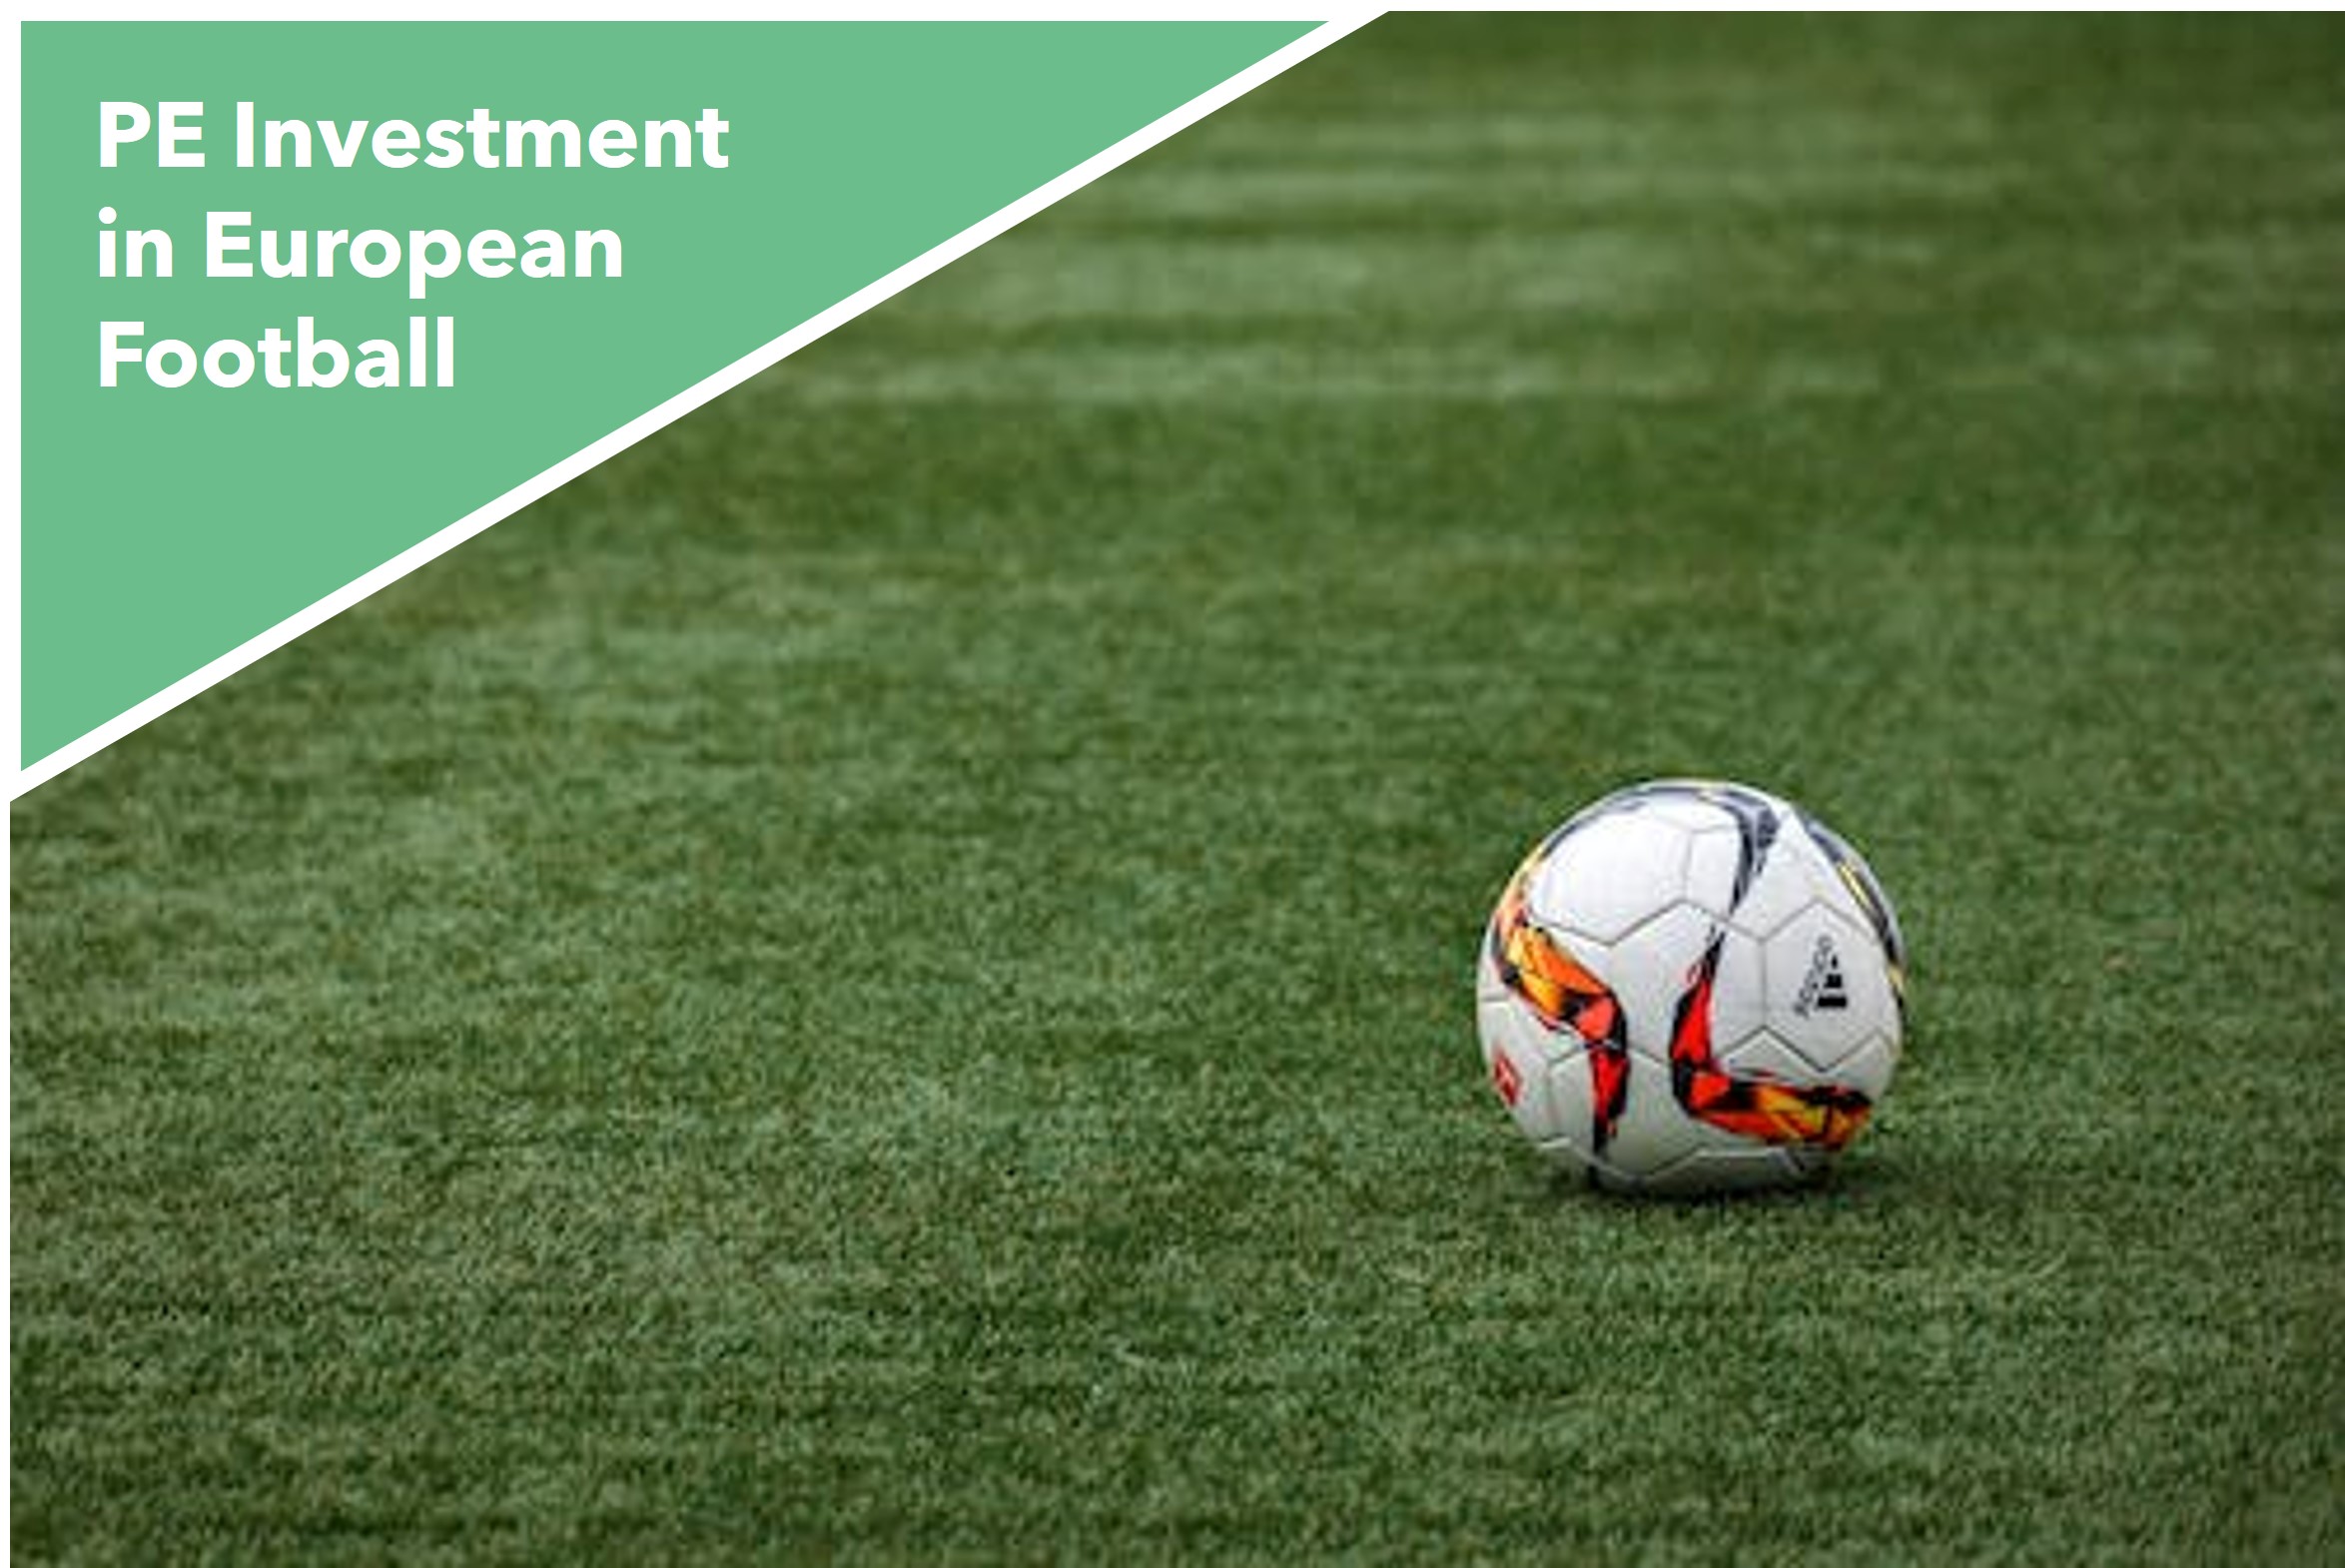 Football Fever: PE Investment in European Football